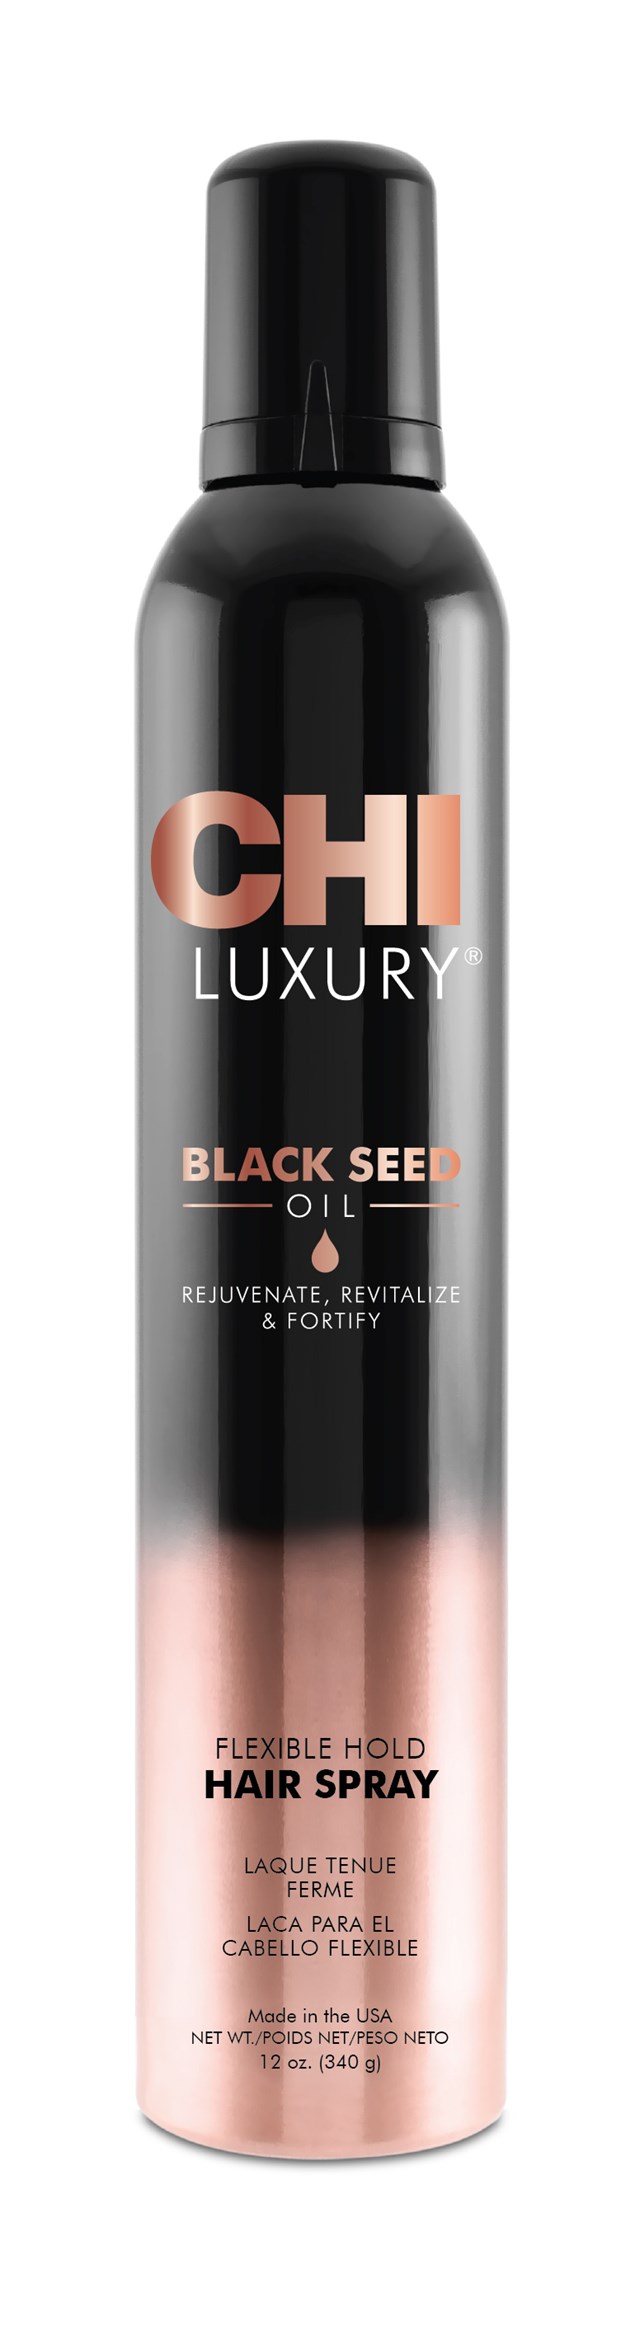 Luxury Black Seed Oil Laque tenue flexible